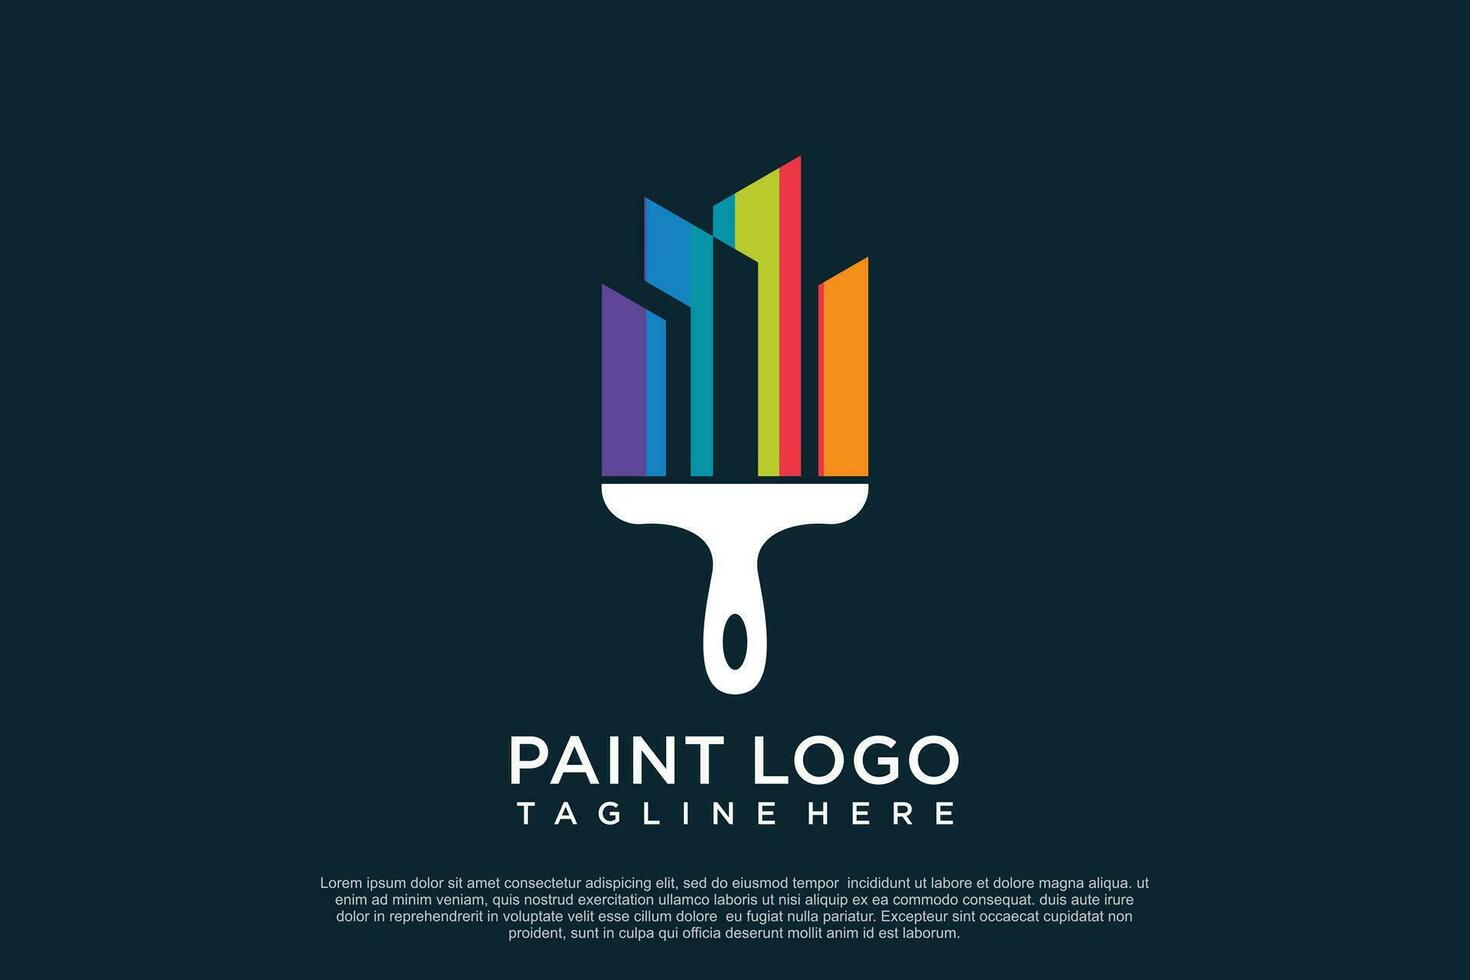 Paint logo design template with creative unique concept Premium Vector